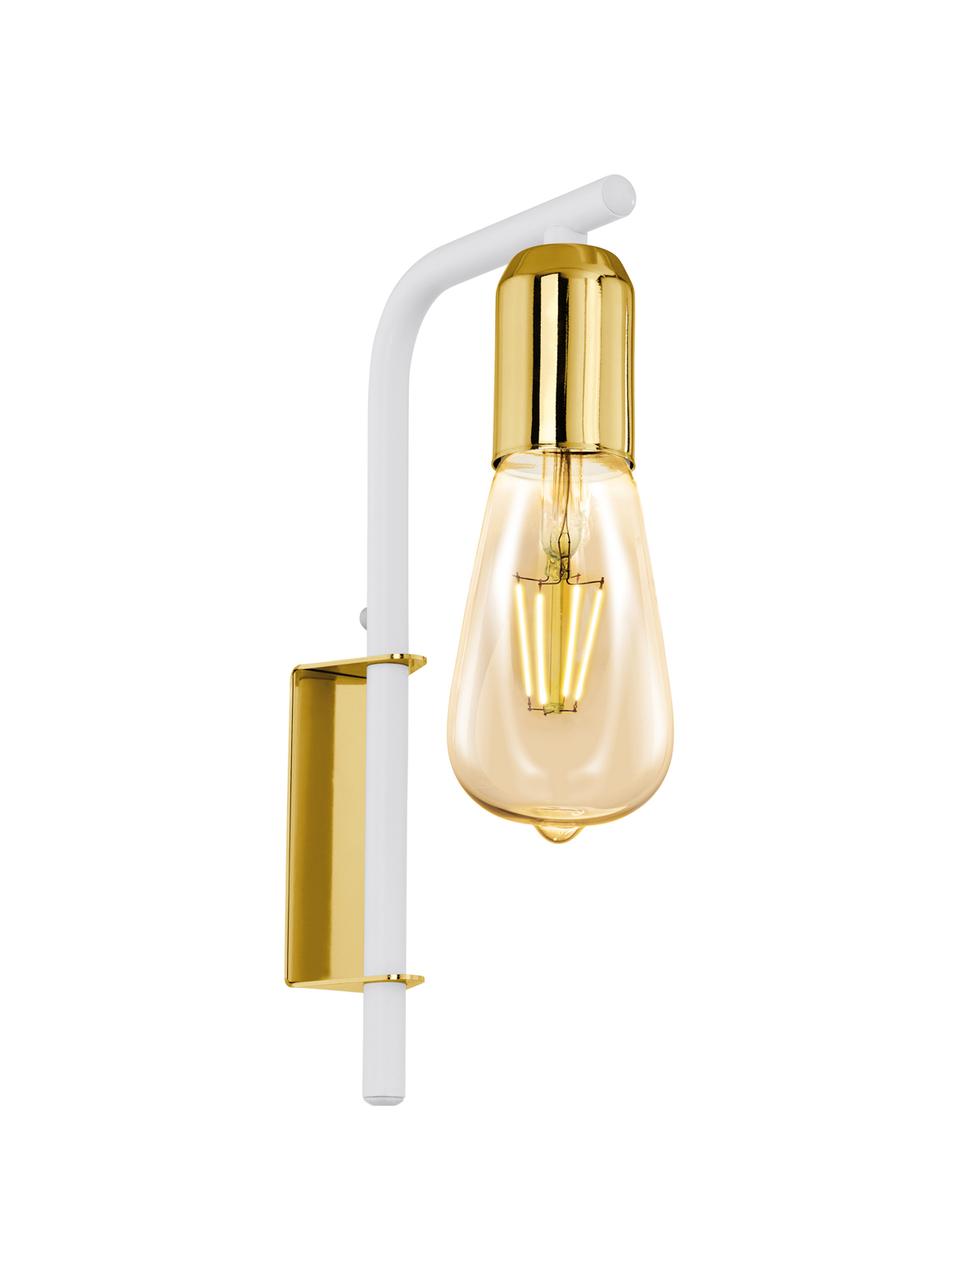 Wandlamp Adri met stekker, Gelakt staal, Wit, goudkleurig, 4 x 26 cm